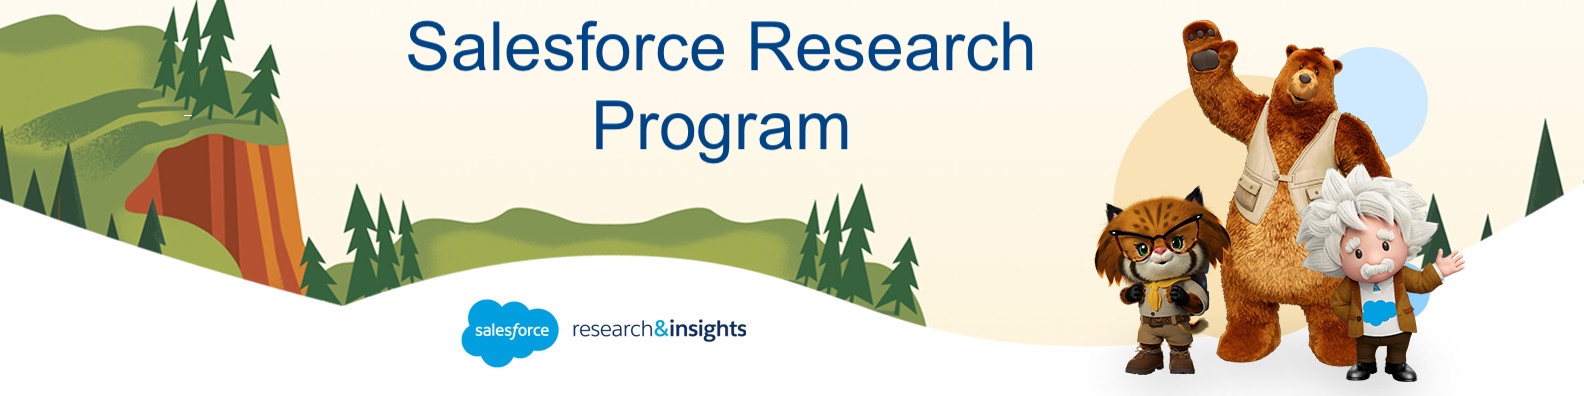 Salesforce Research Program banner